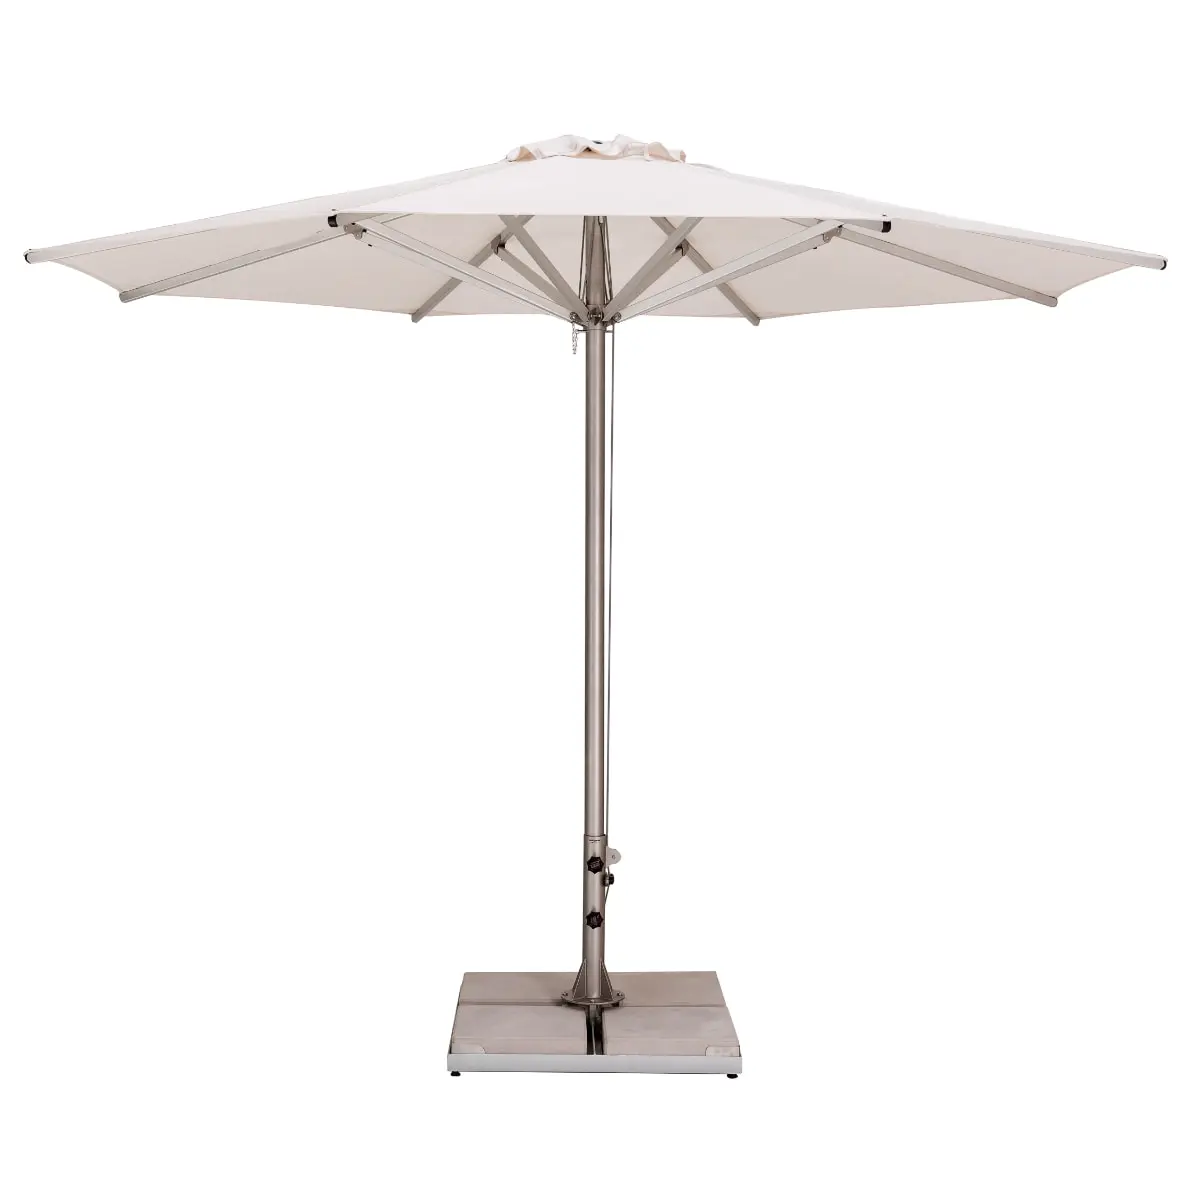 Ultimate Patio Umbrellas Ing Guide, Best Patio Umbrella For Sun Protection